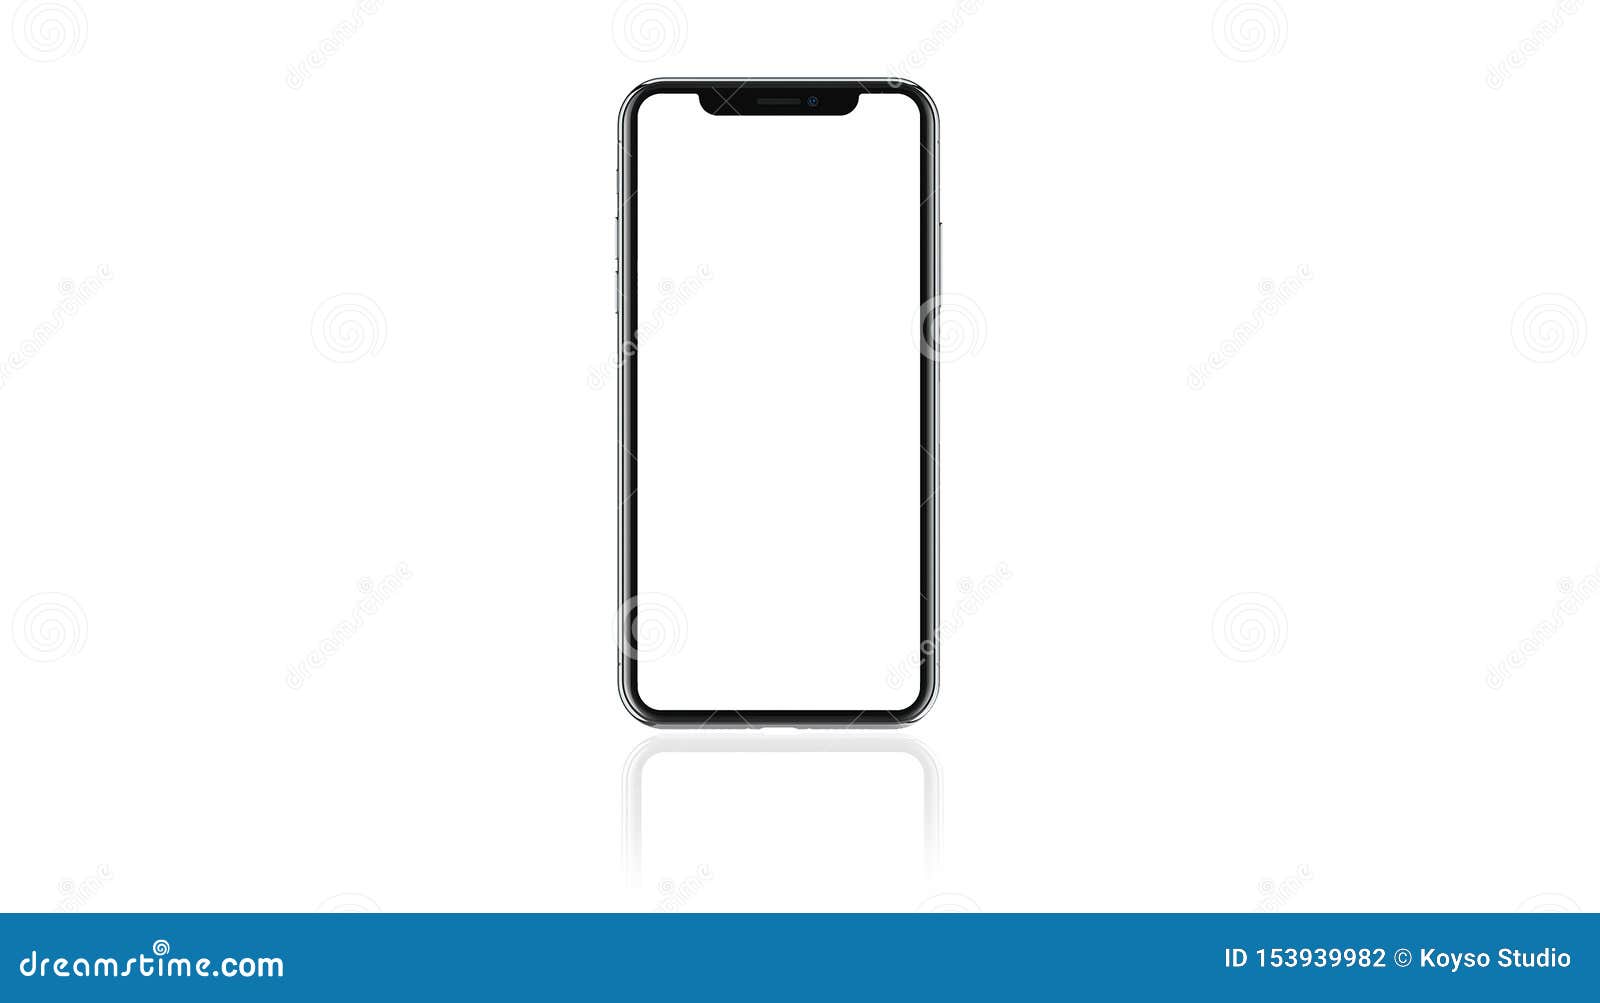 blank modern mobile phone  on white background